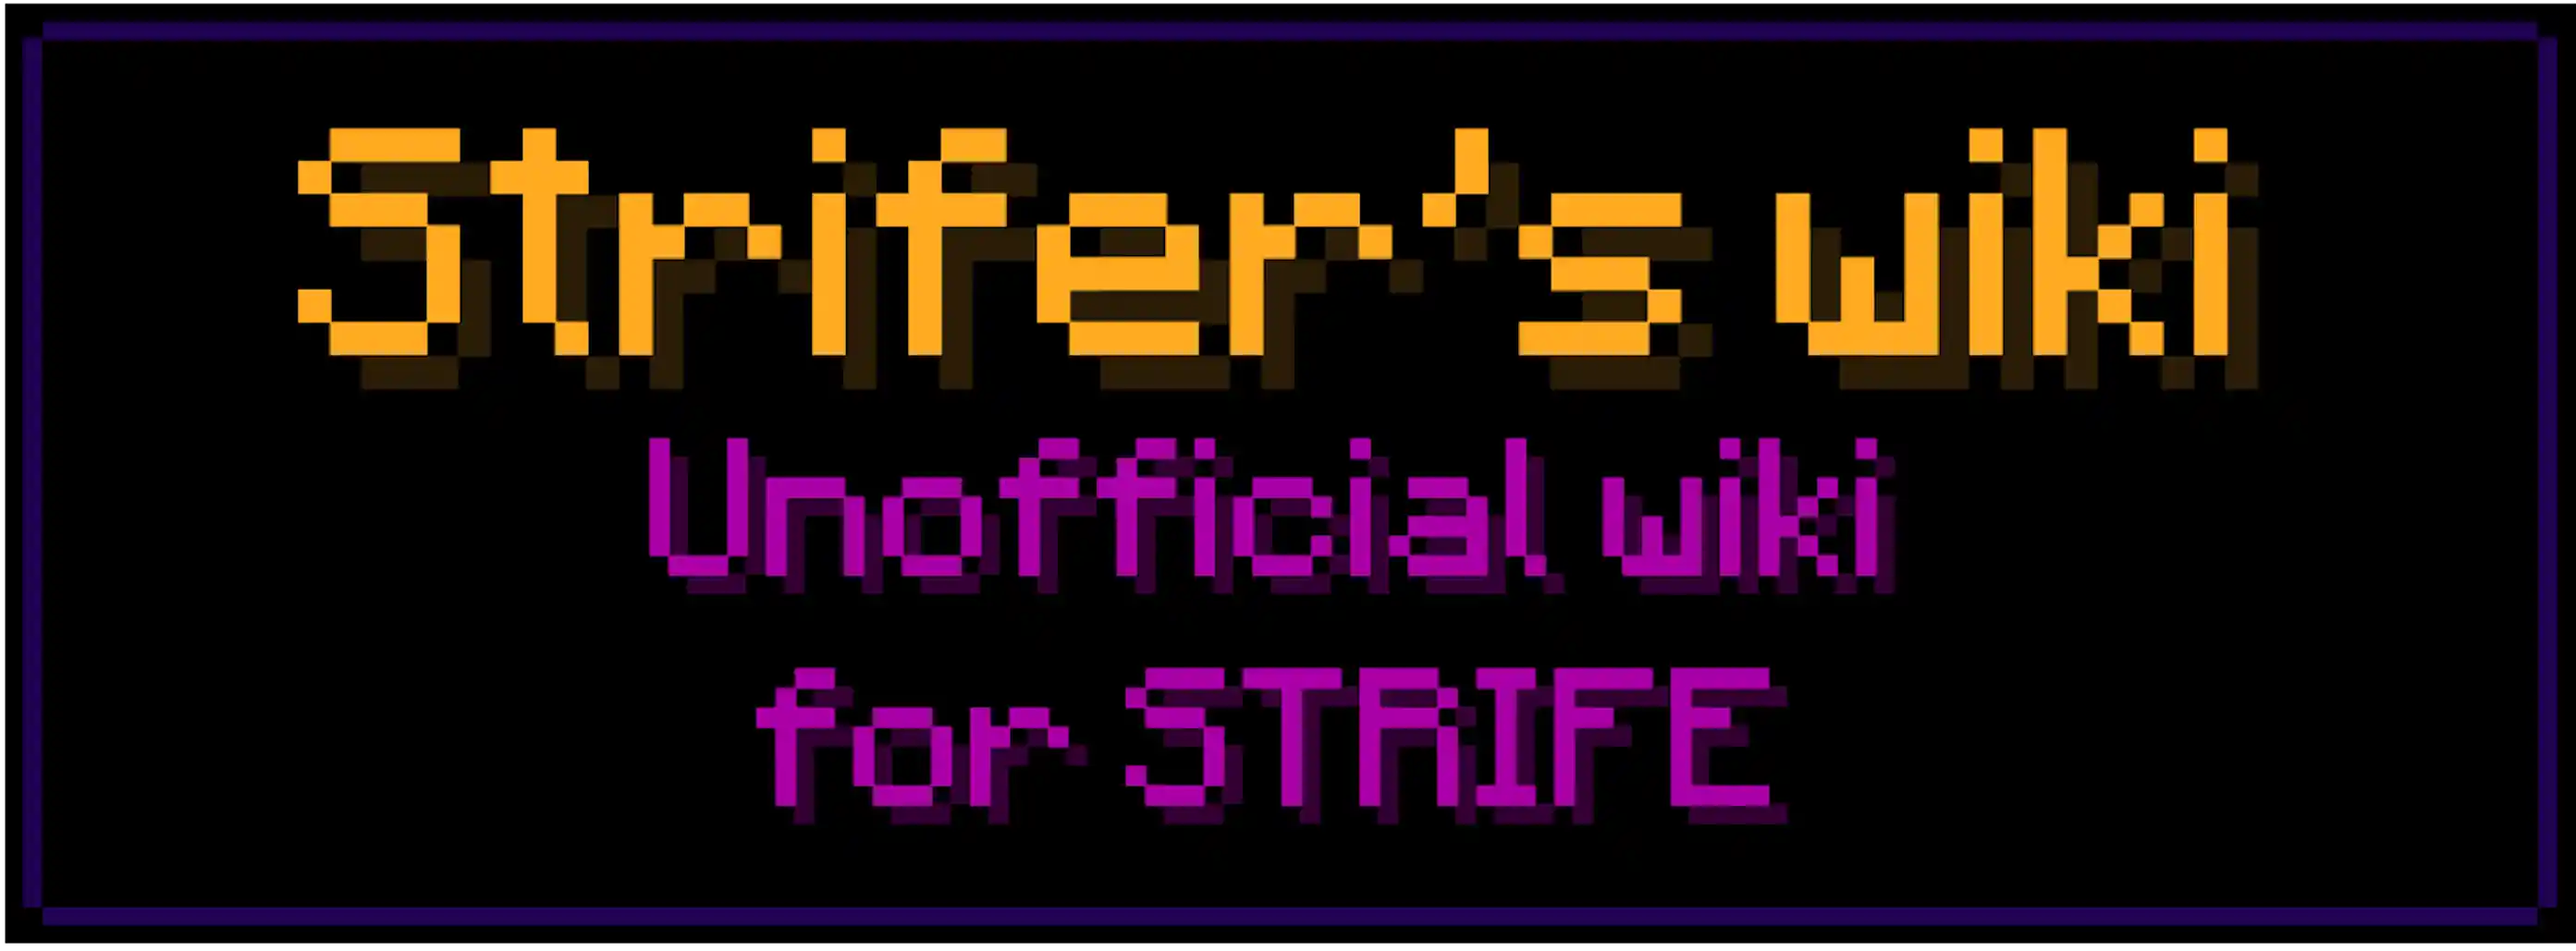 Strifer's wiki logo_1.png